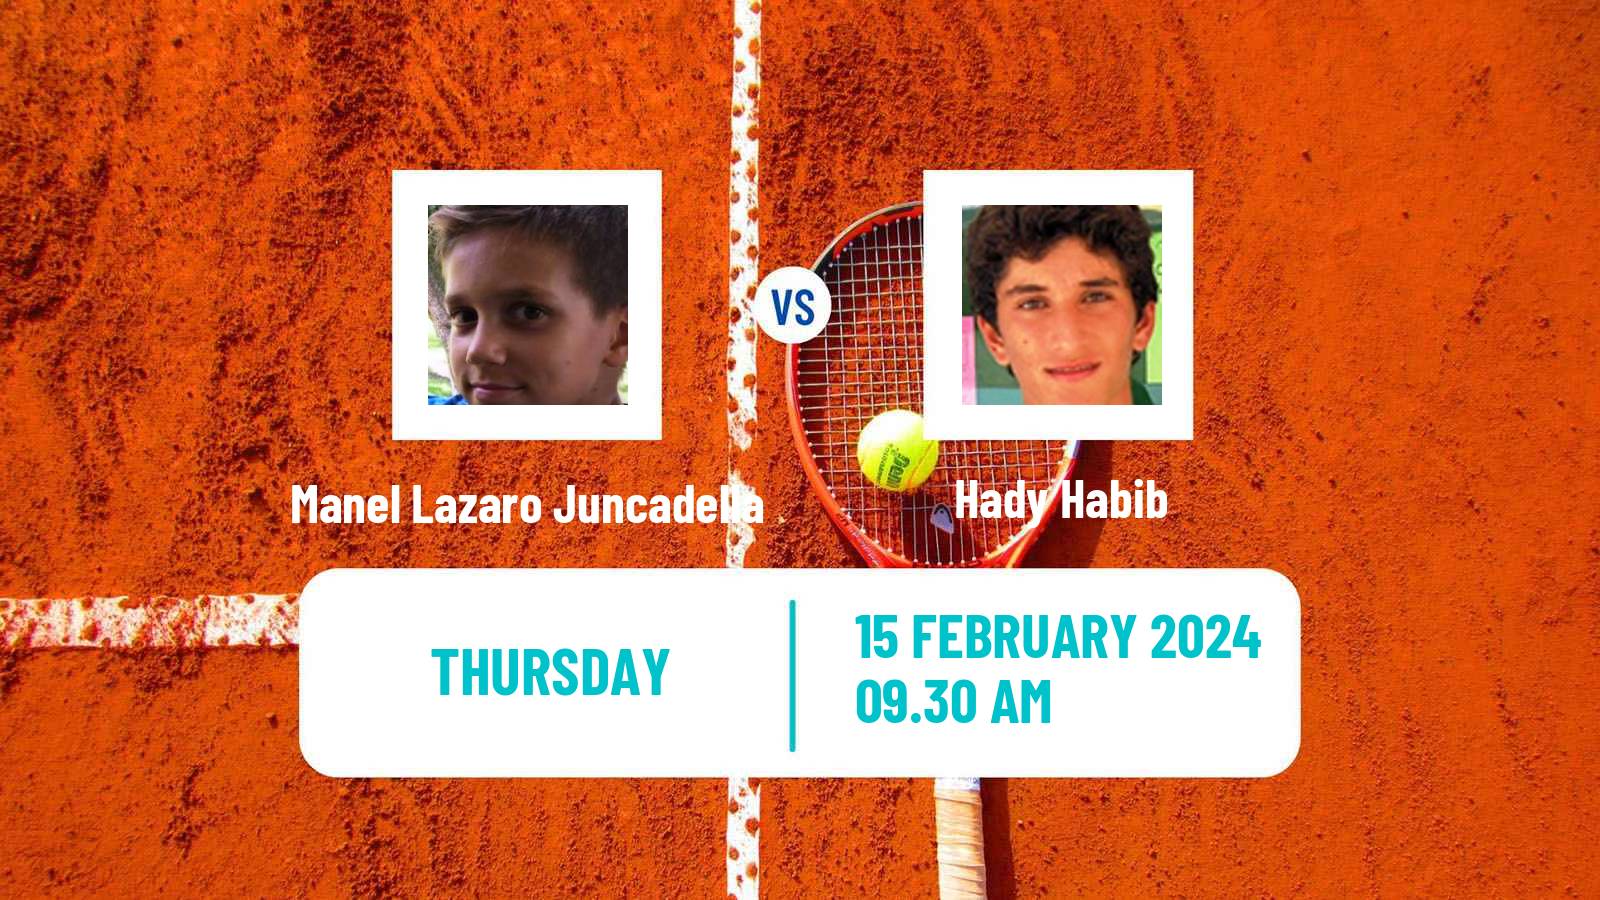 Tennis ITF M25 Antalya 6 Men Manel Lazaro Juncadella - Hady Habib